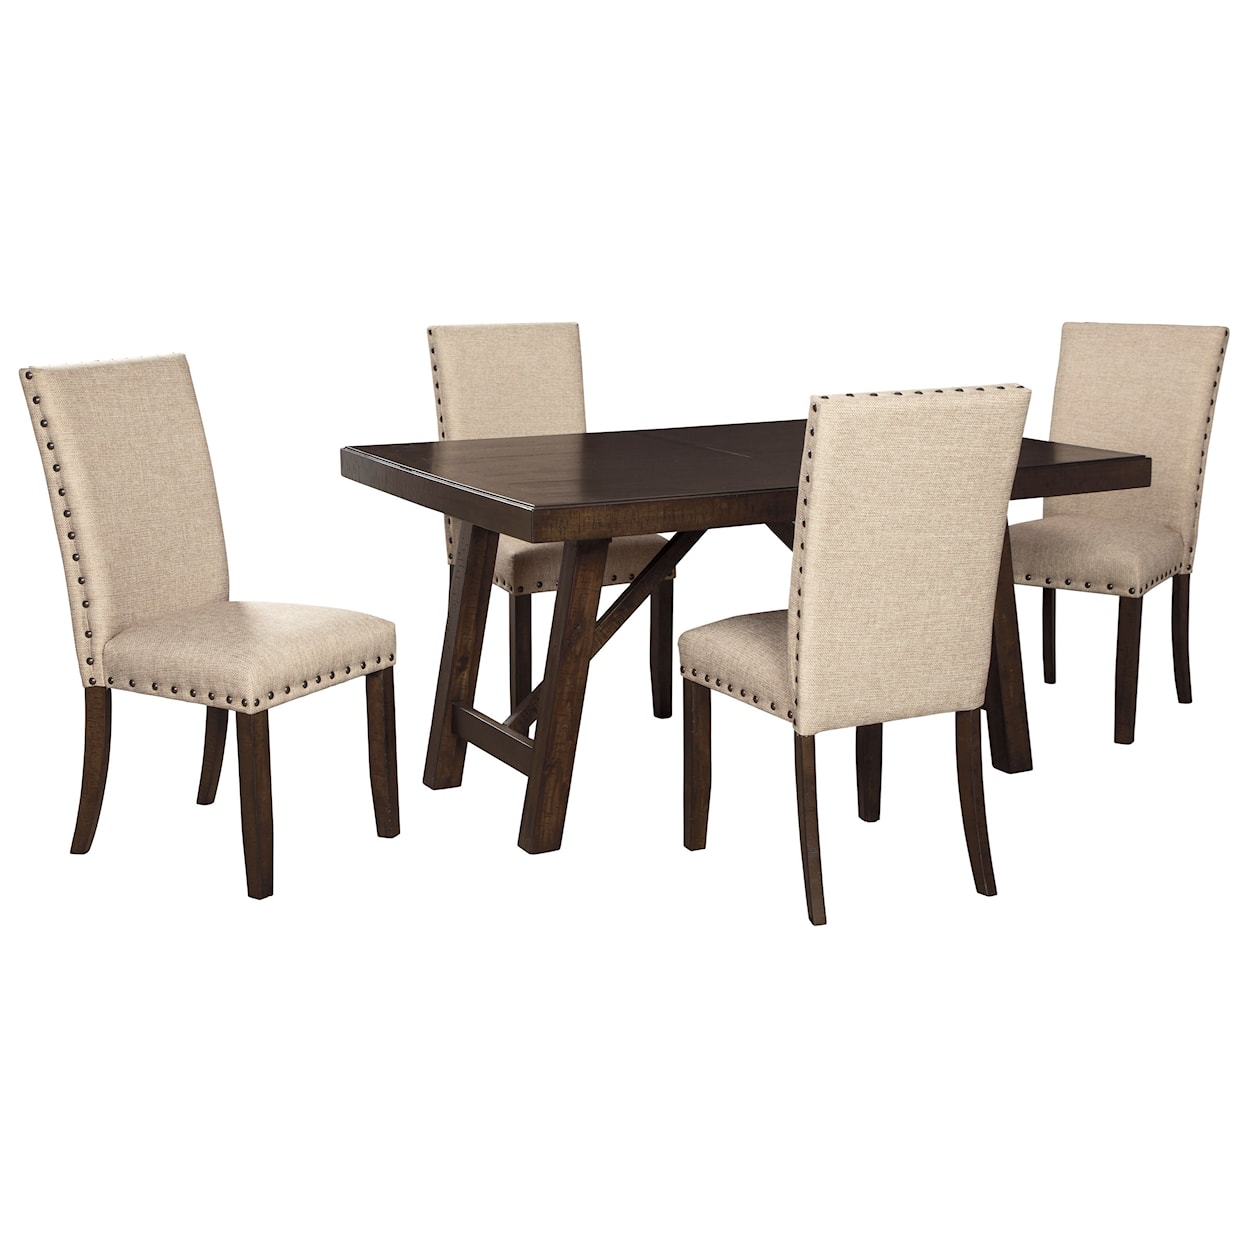 Ashley Furniture Signature Design Rokane Dining Table Set for Four